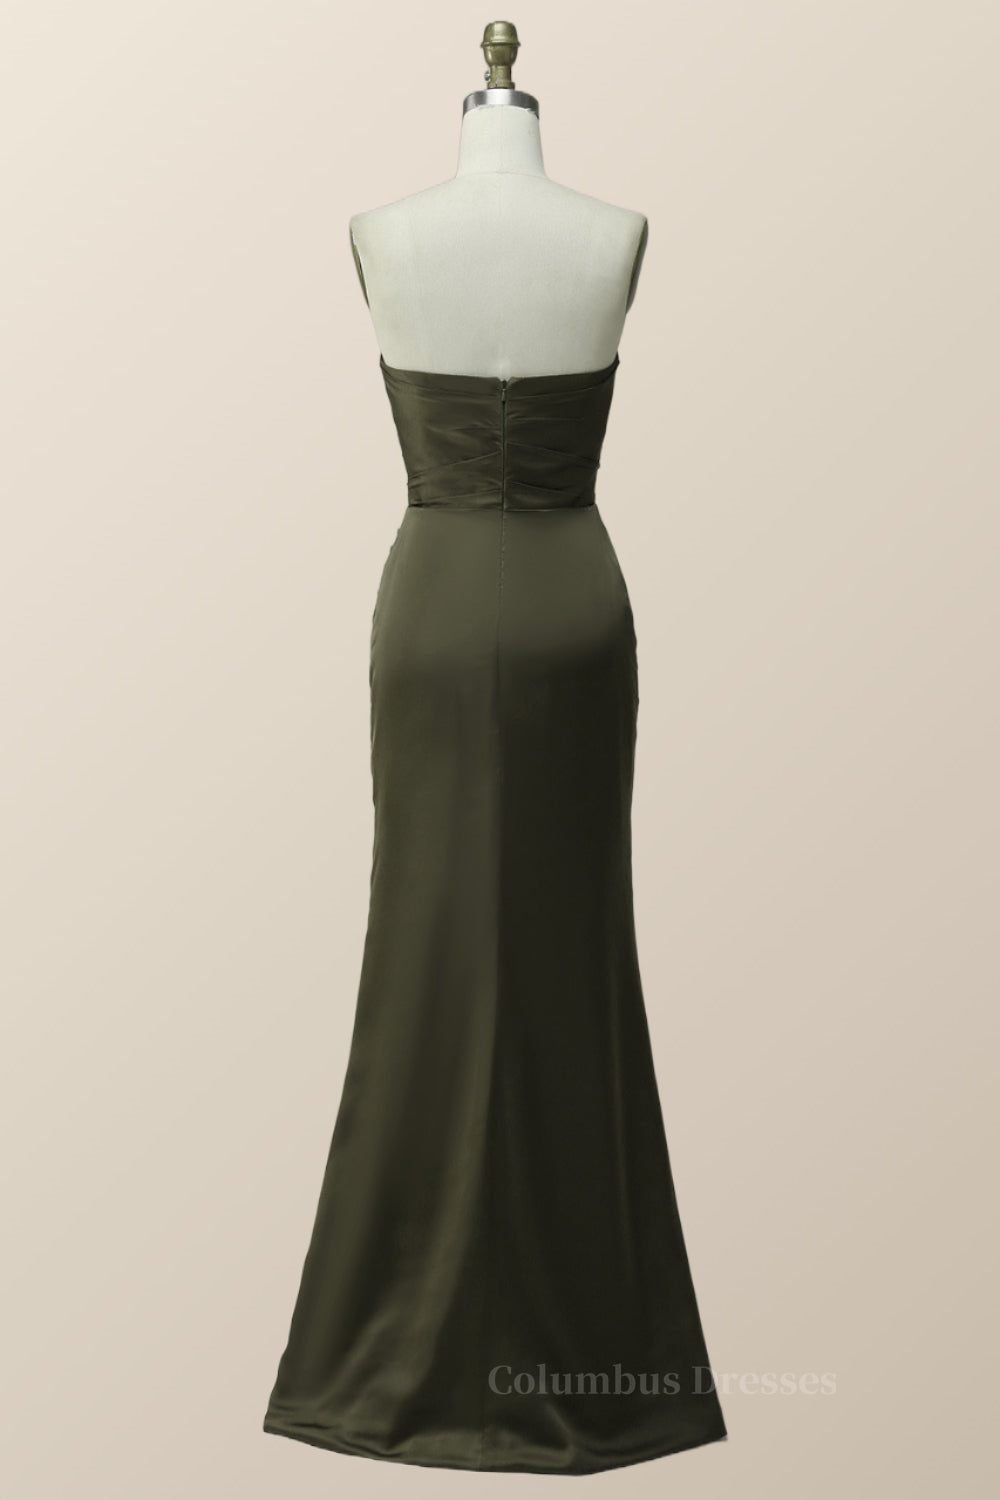 127 Prom Dress, Strapless Olivia Green Mermaid Long Bridesmaid Dress